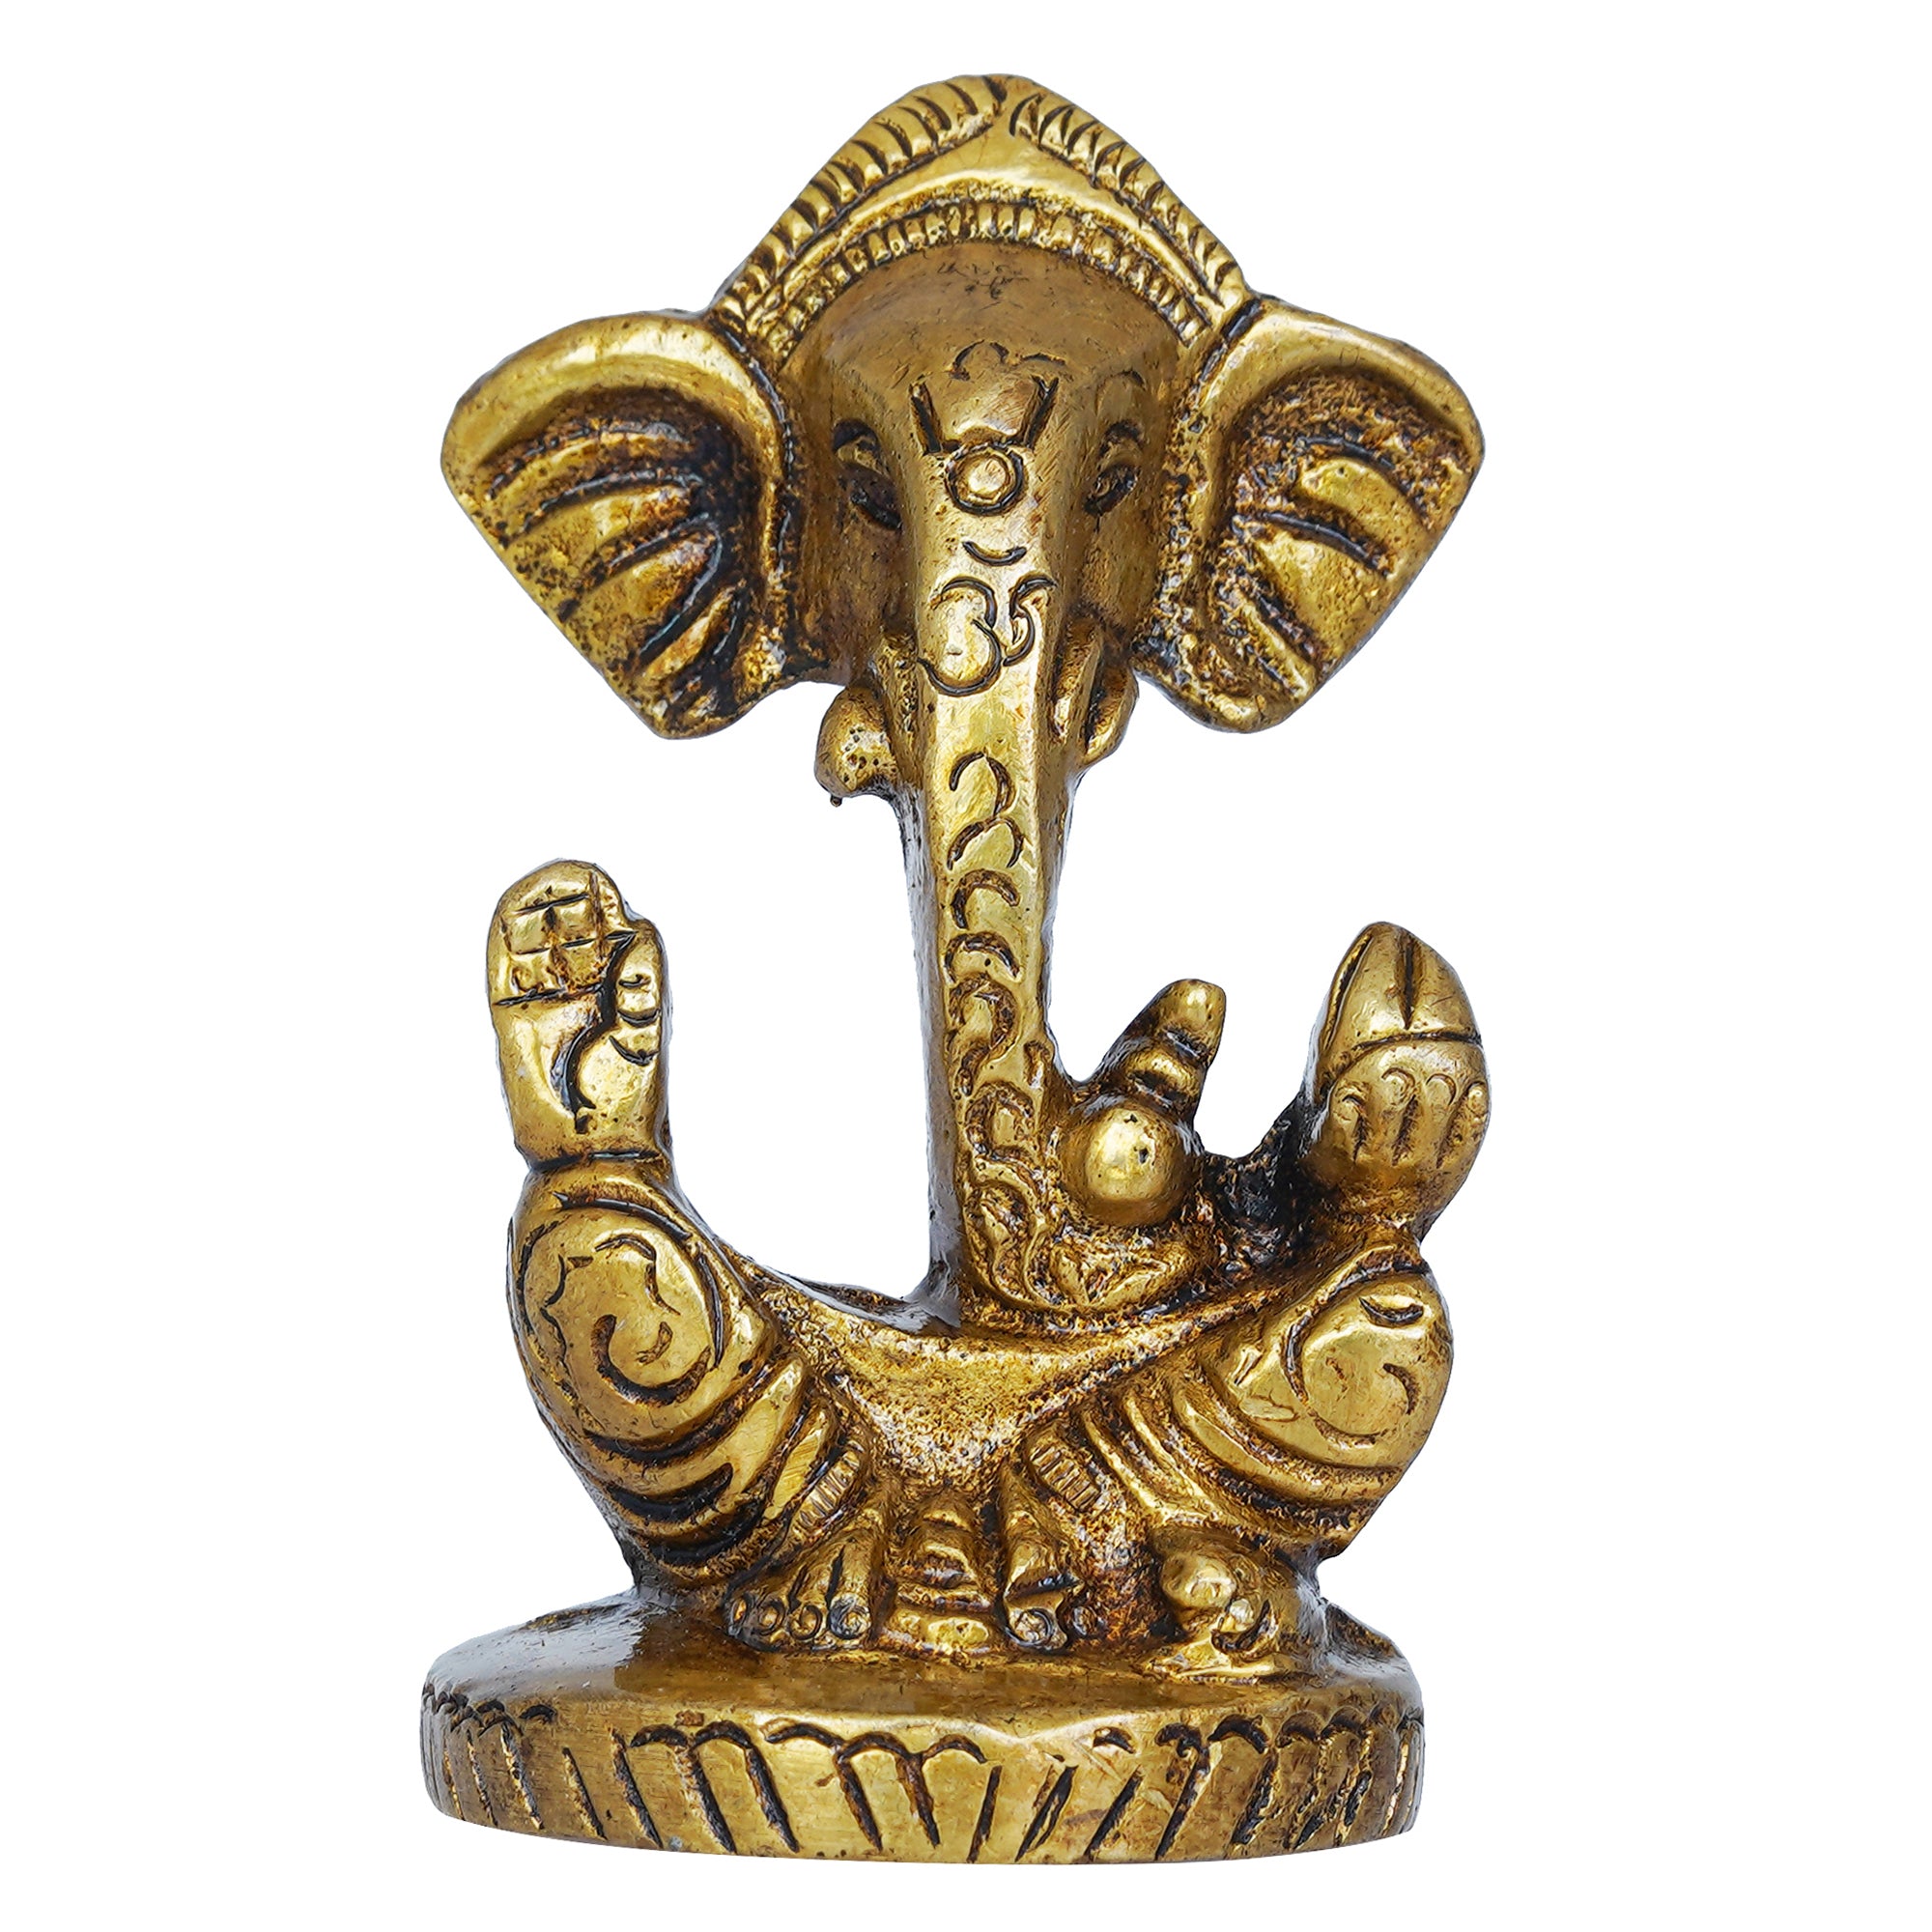 Golden Brass Blessing Lord Ganesha Idol Murti - God Statue for Car Dashboard, Home Decor, Office Desk, Temple Mandir 2